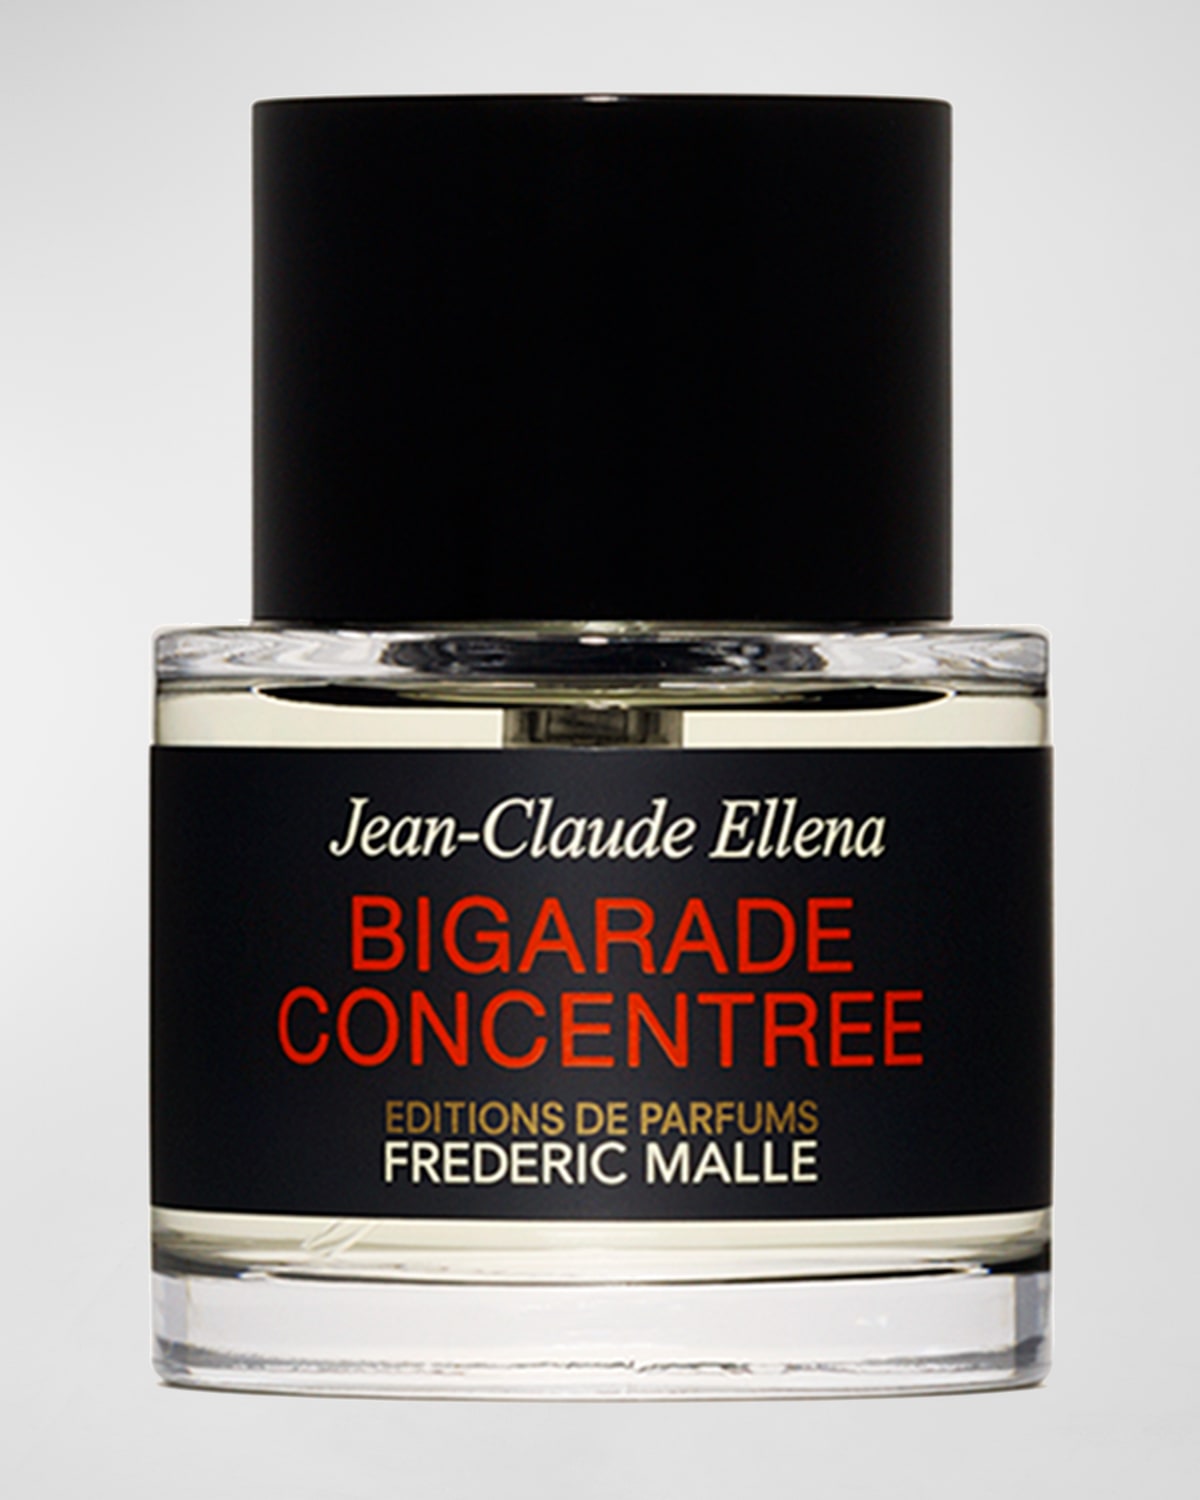 Bigarade Concentree Perfume, 1.7 oz.